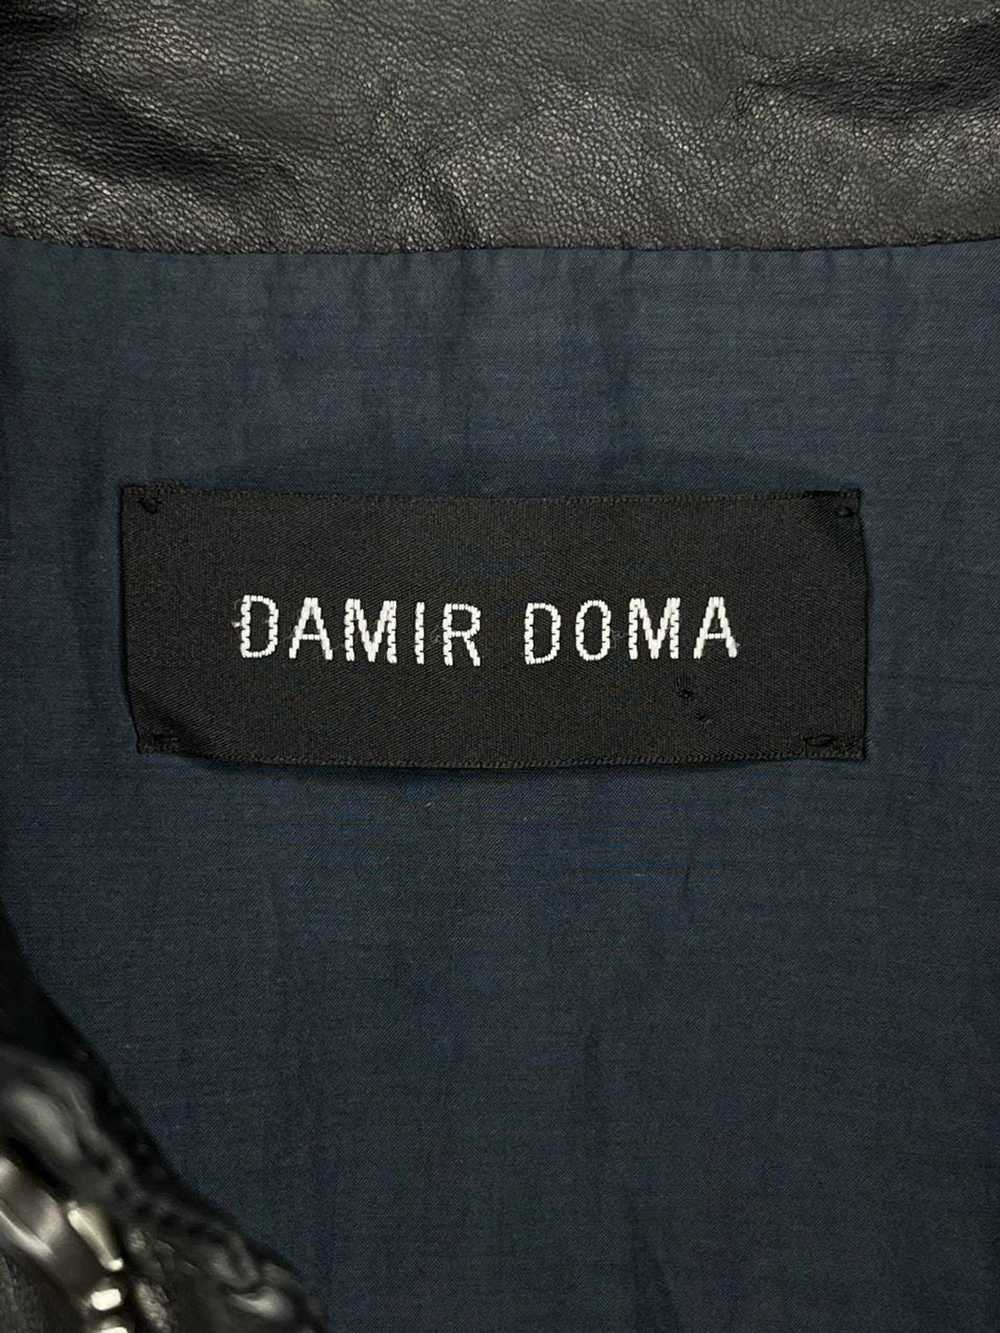 Damir Doma Damir Doma Leather Jacket - image 8